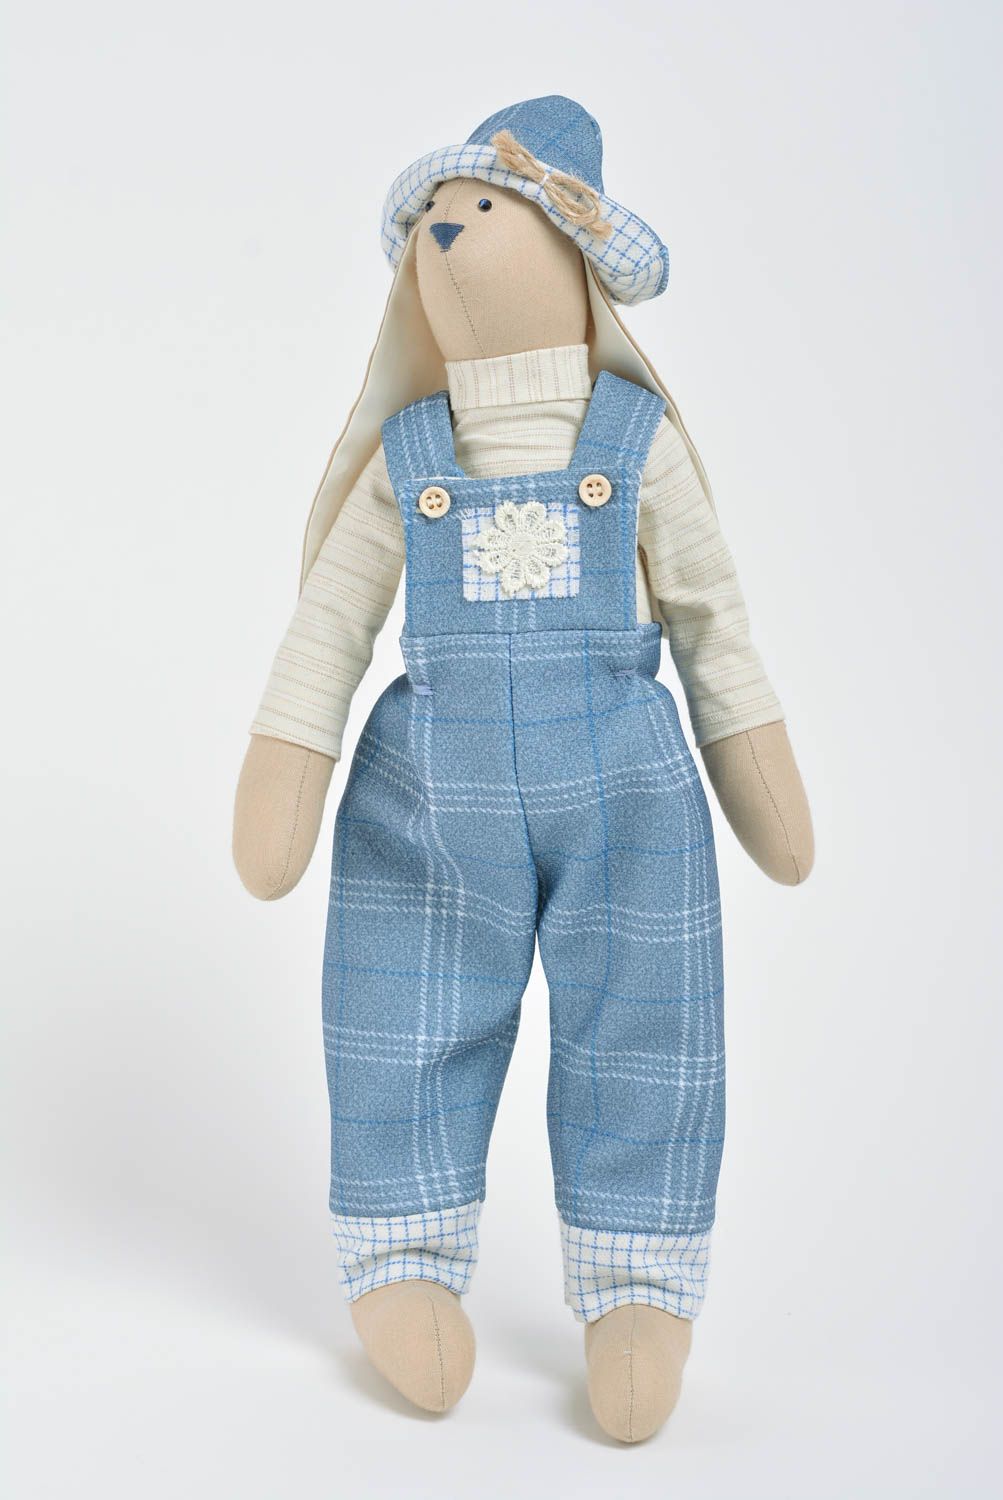 Handmade designer interior fabric soft toy rabbit boy in blue costume and hat photo 1